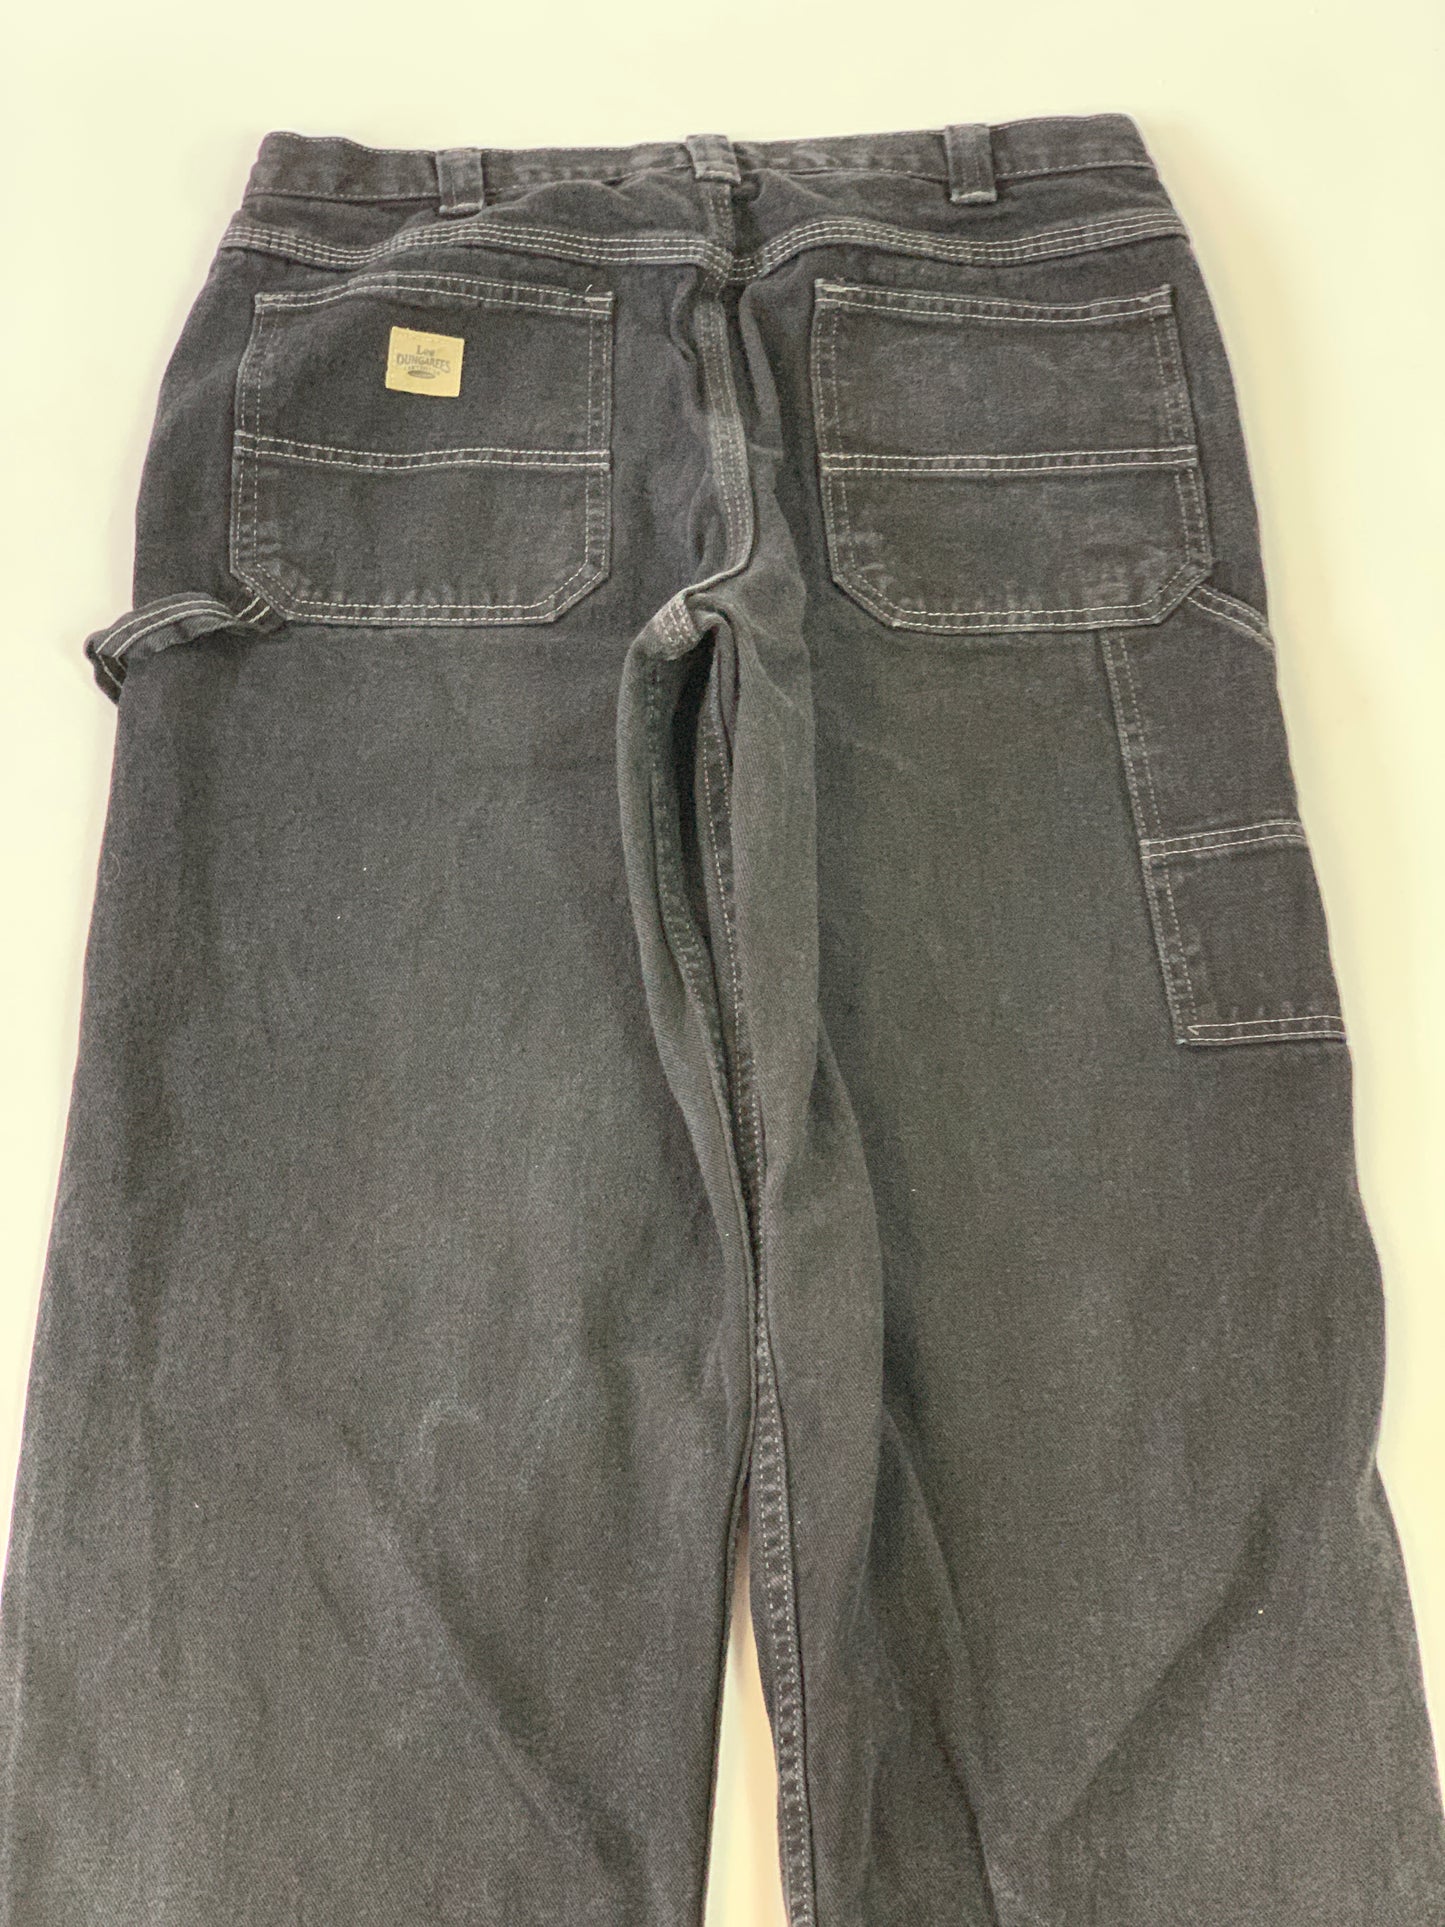 Lee Dungarees Carpenter Jeans - 32